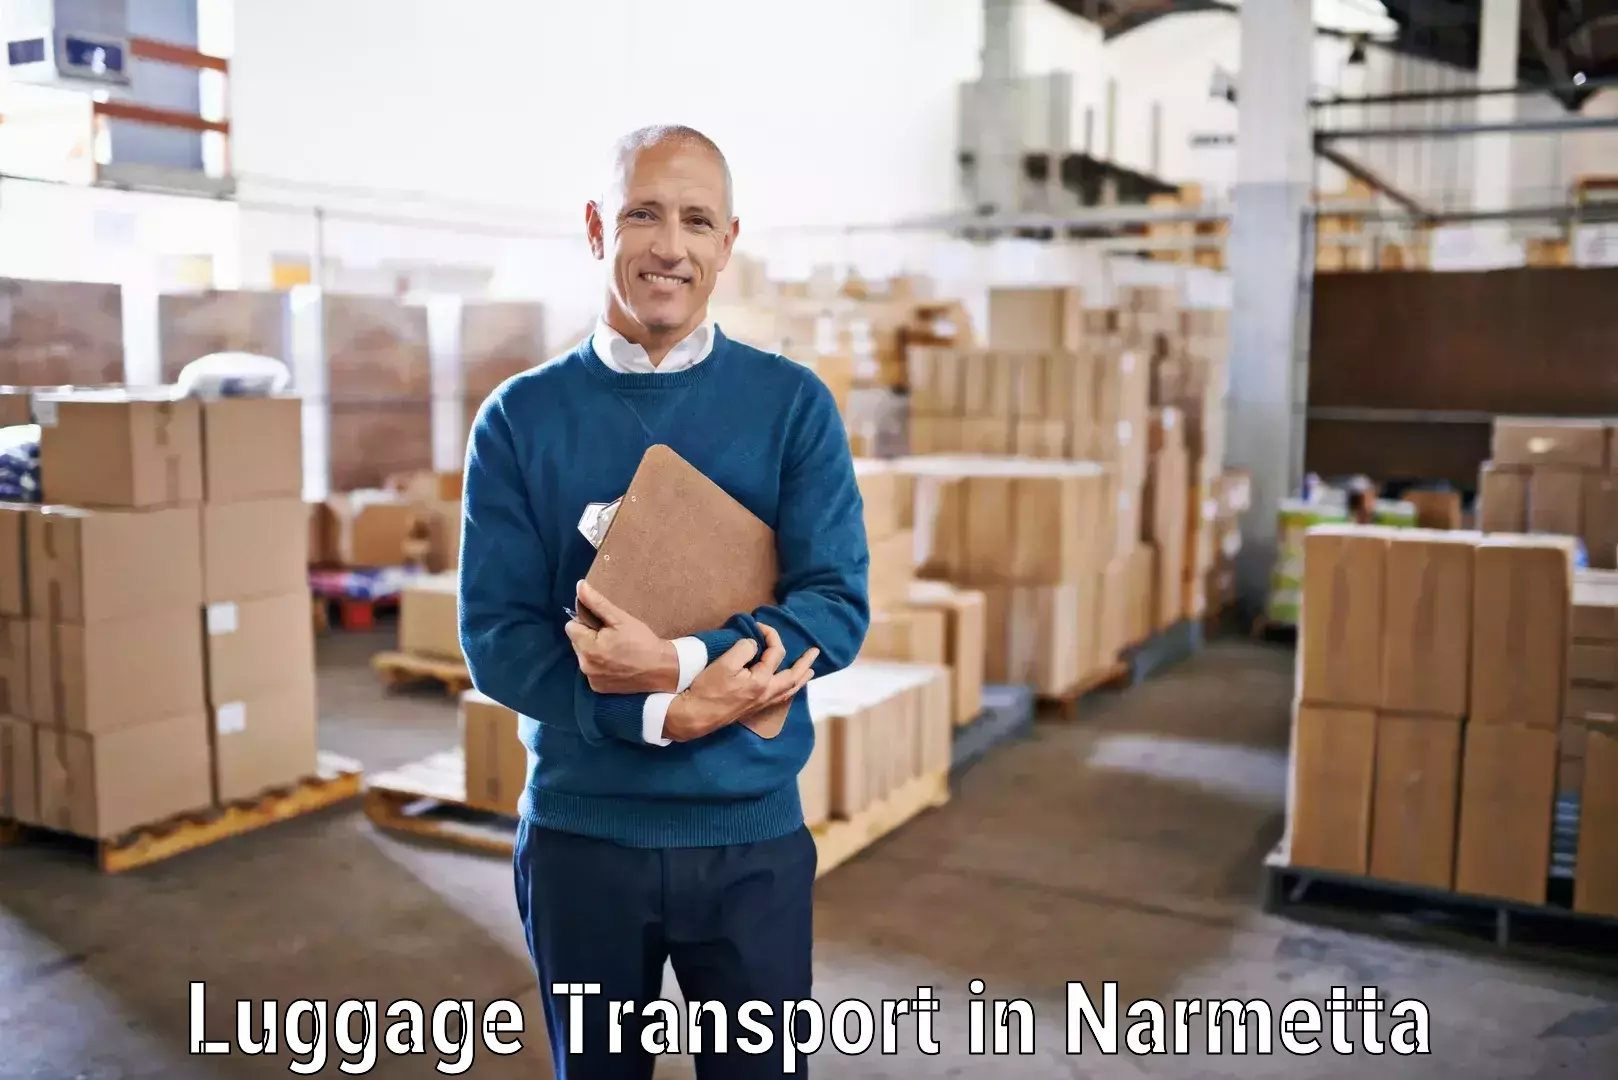 Express baggage shipping in Narmetta